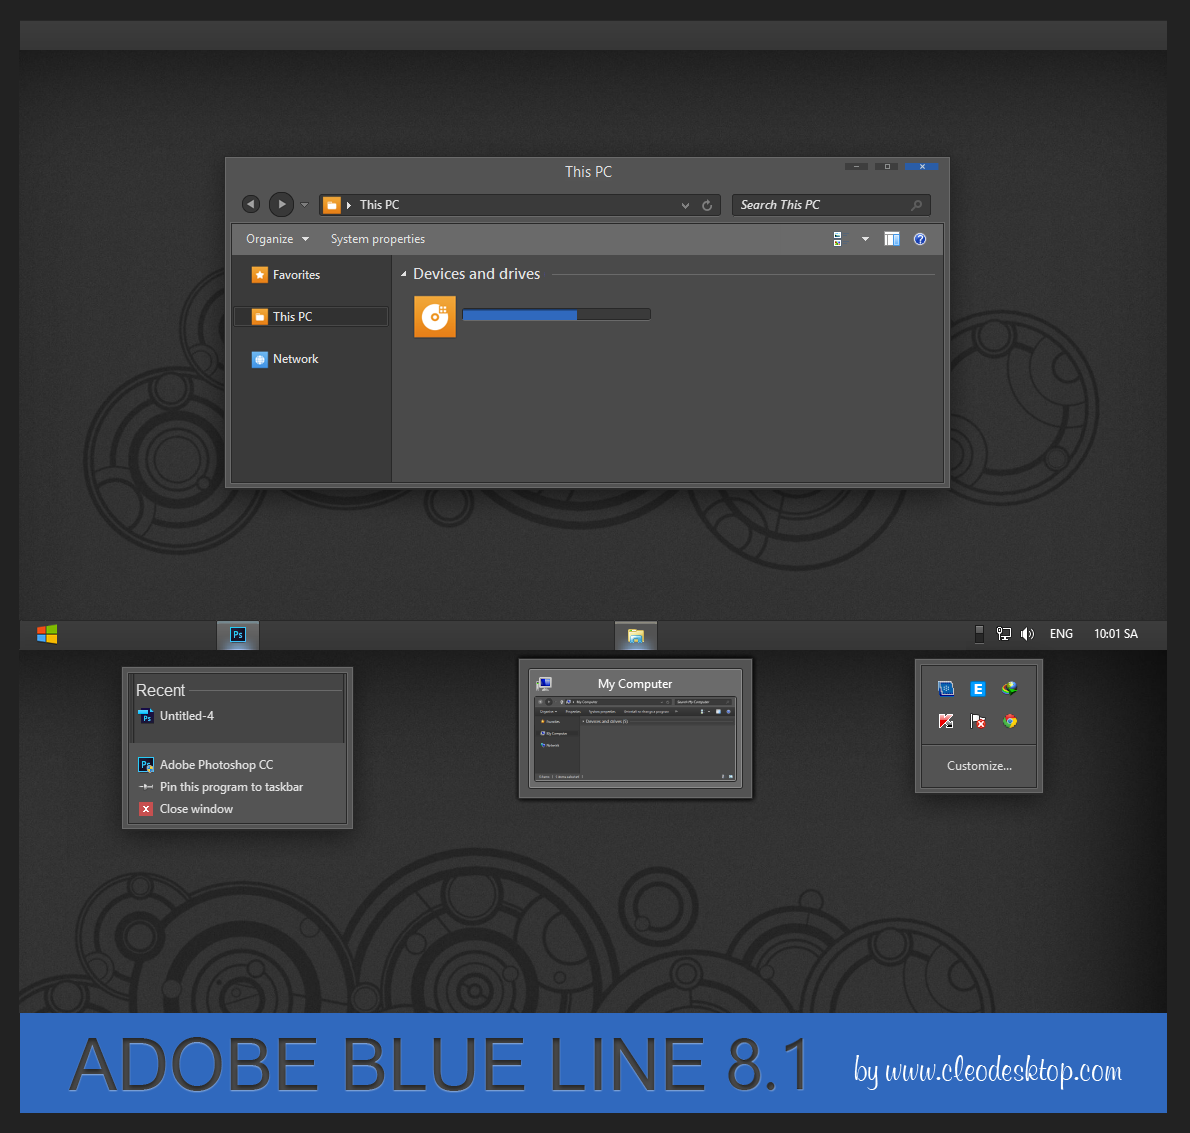 Adobe blue line Theme Windows 8.1